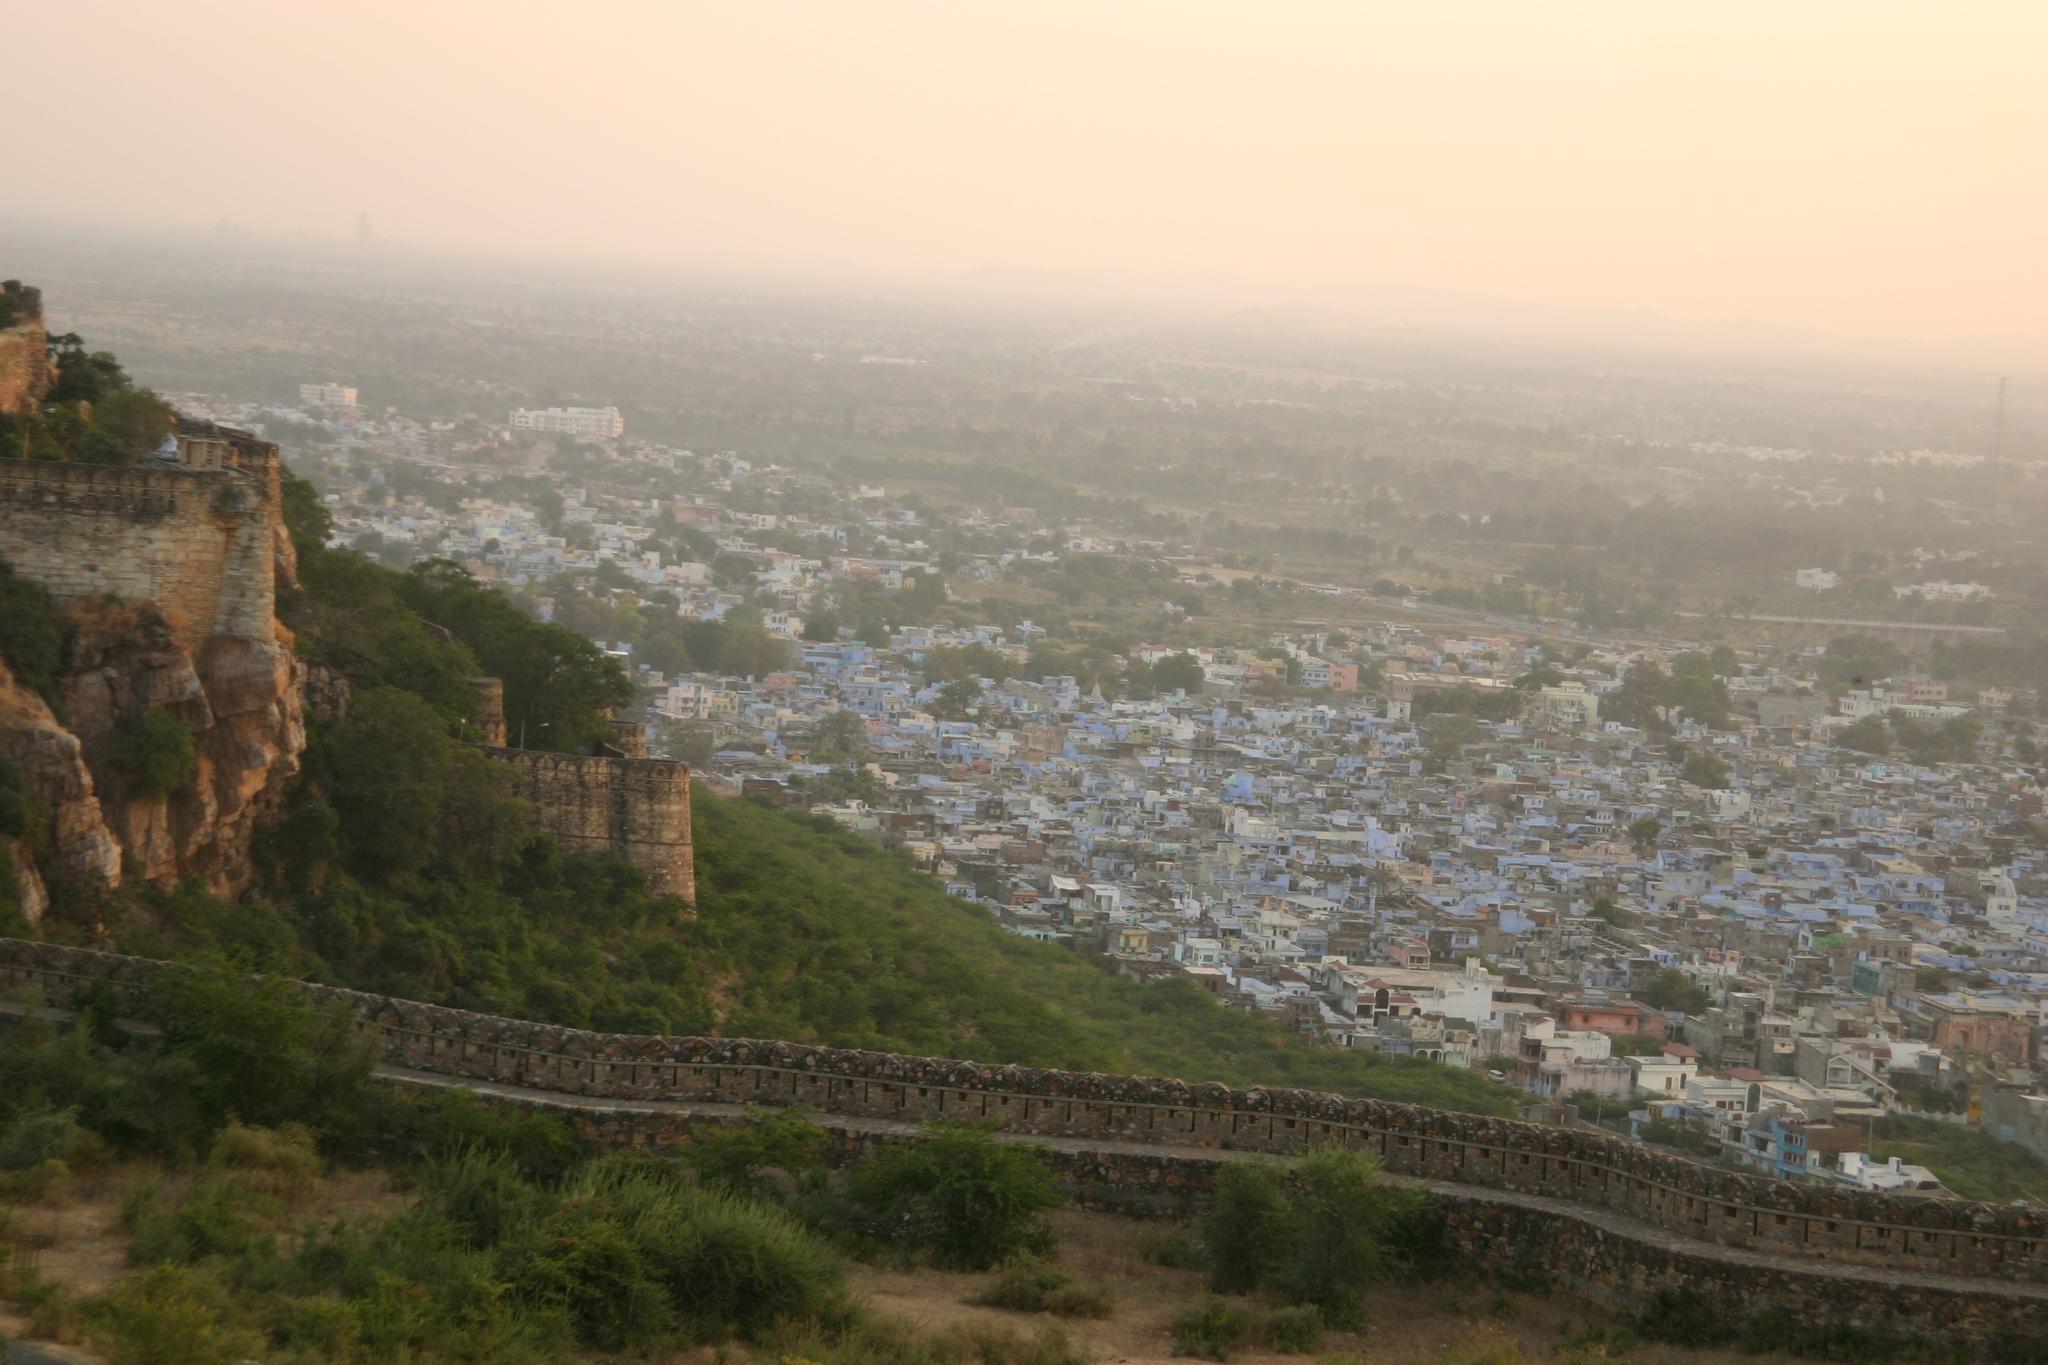 Rani Patmavati Chittorgarh Fort